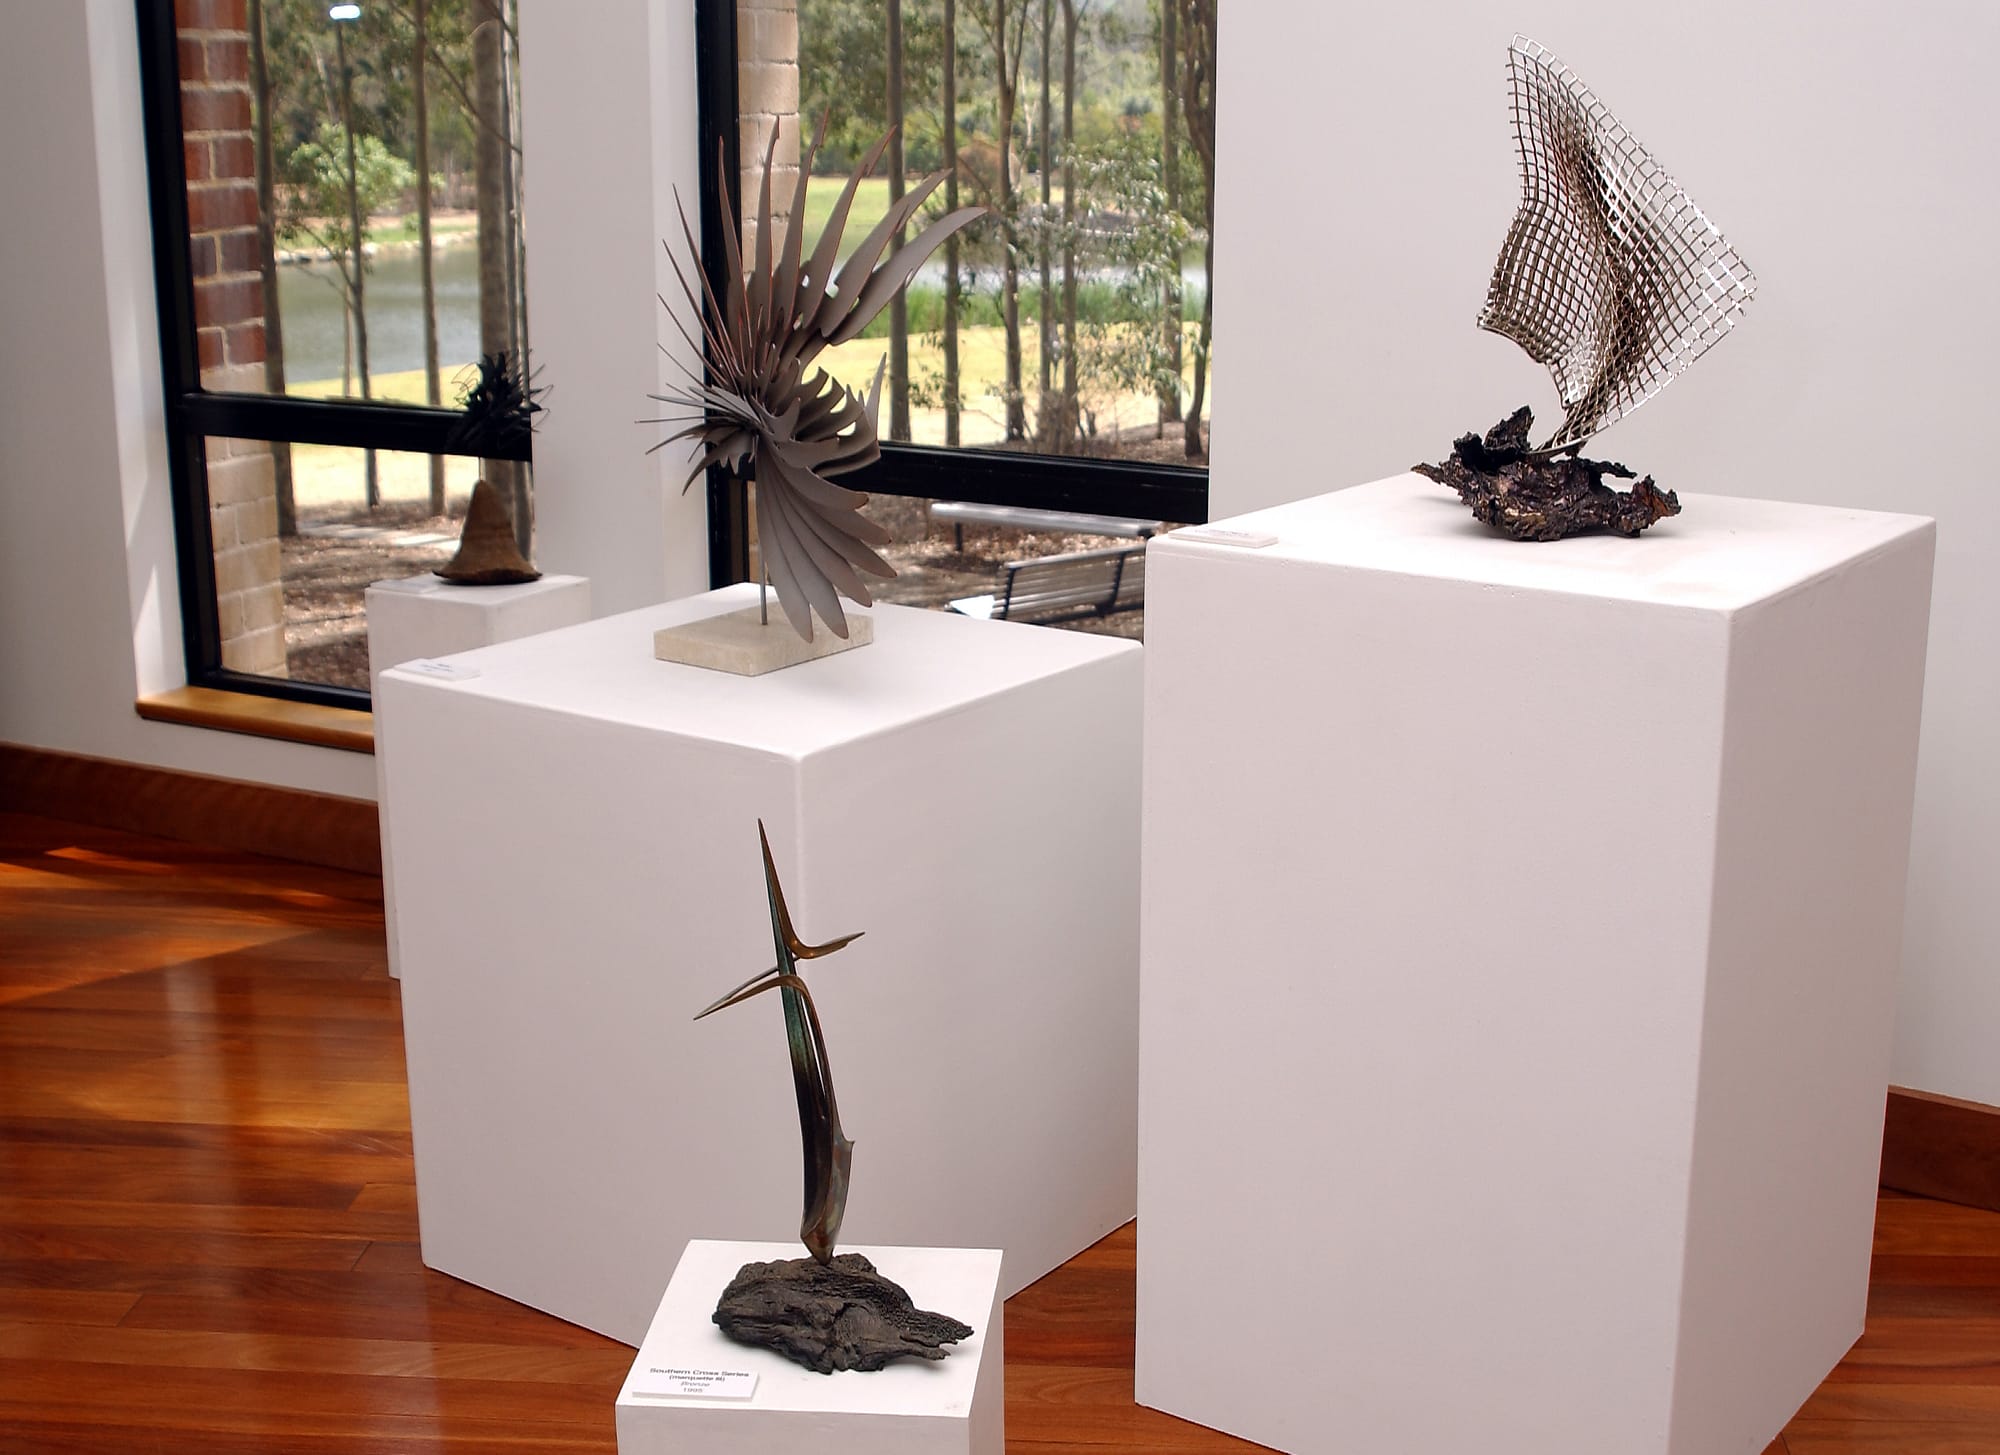 Four small sculptures, image © Effy Alexakis 2002